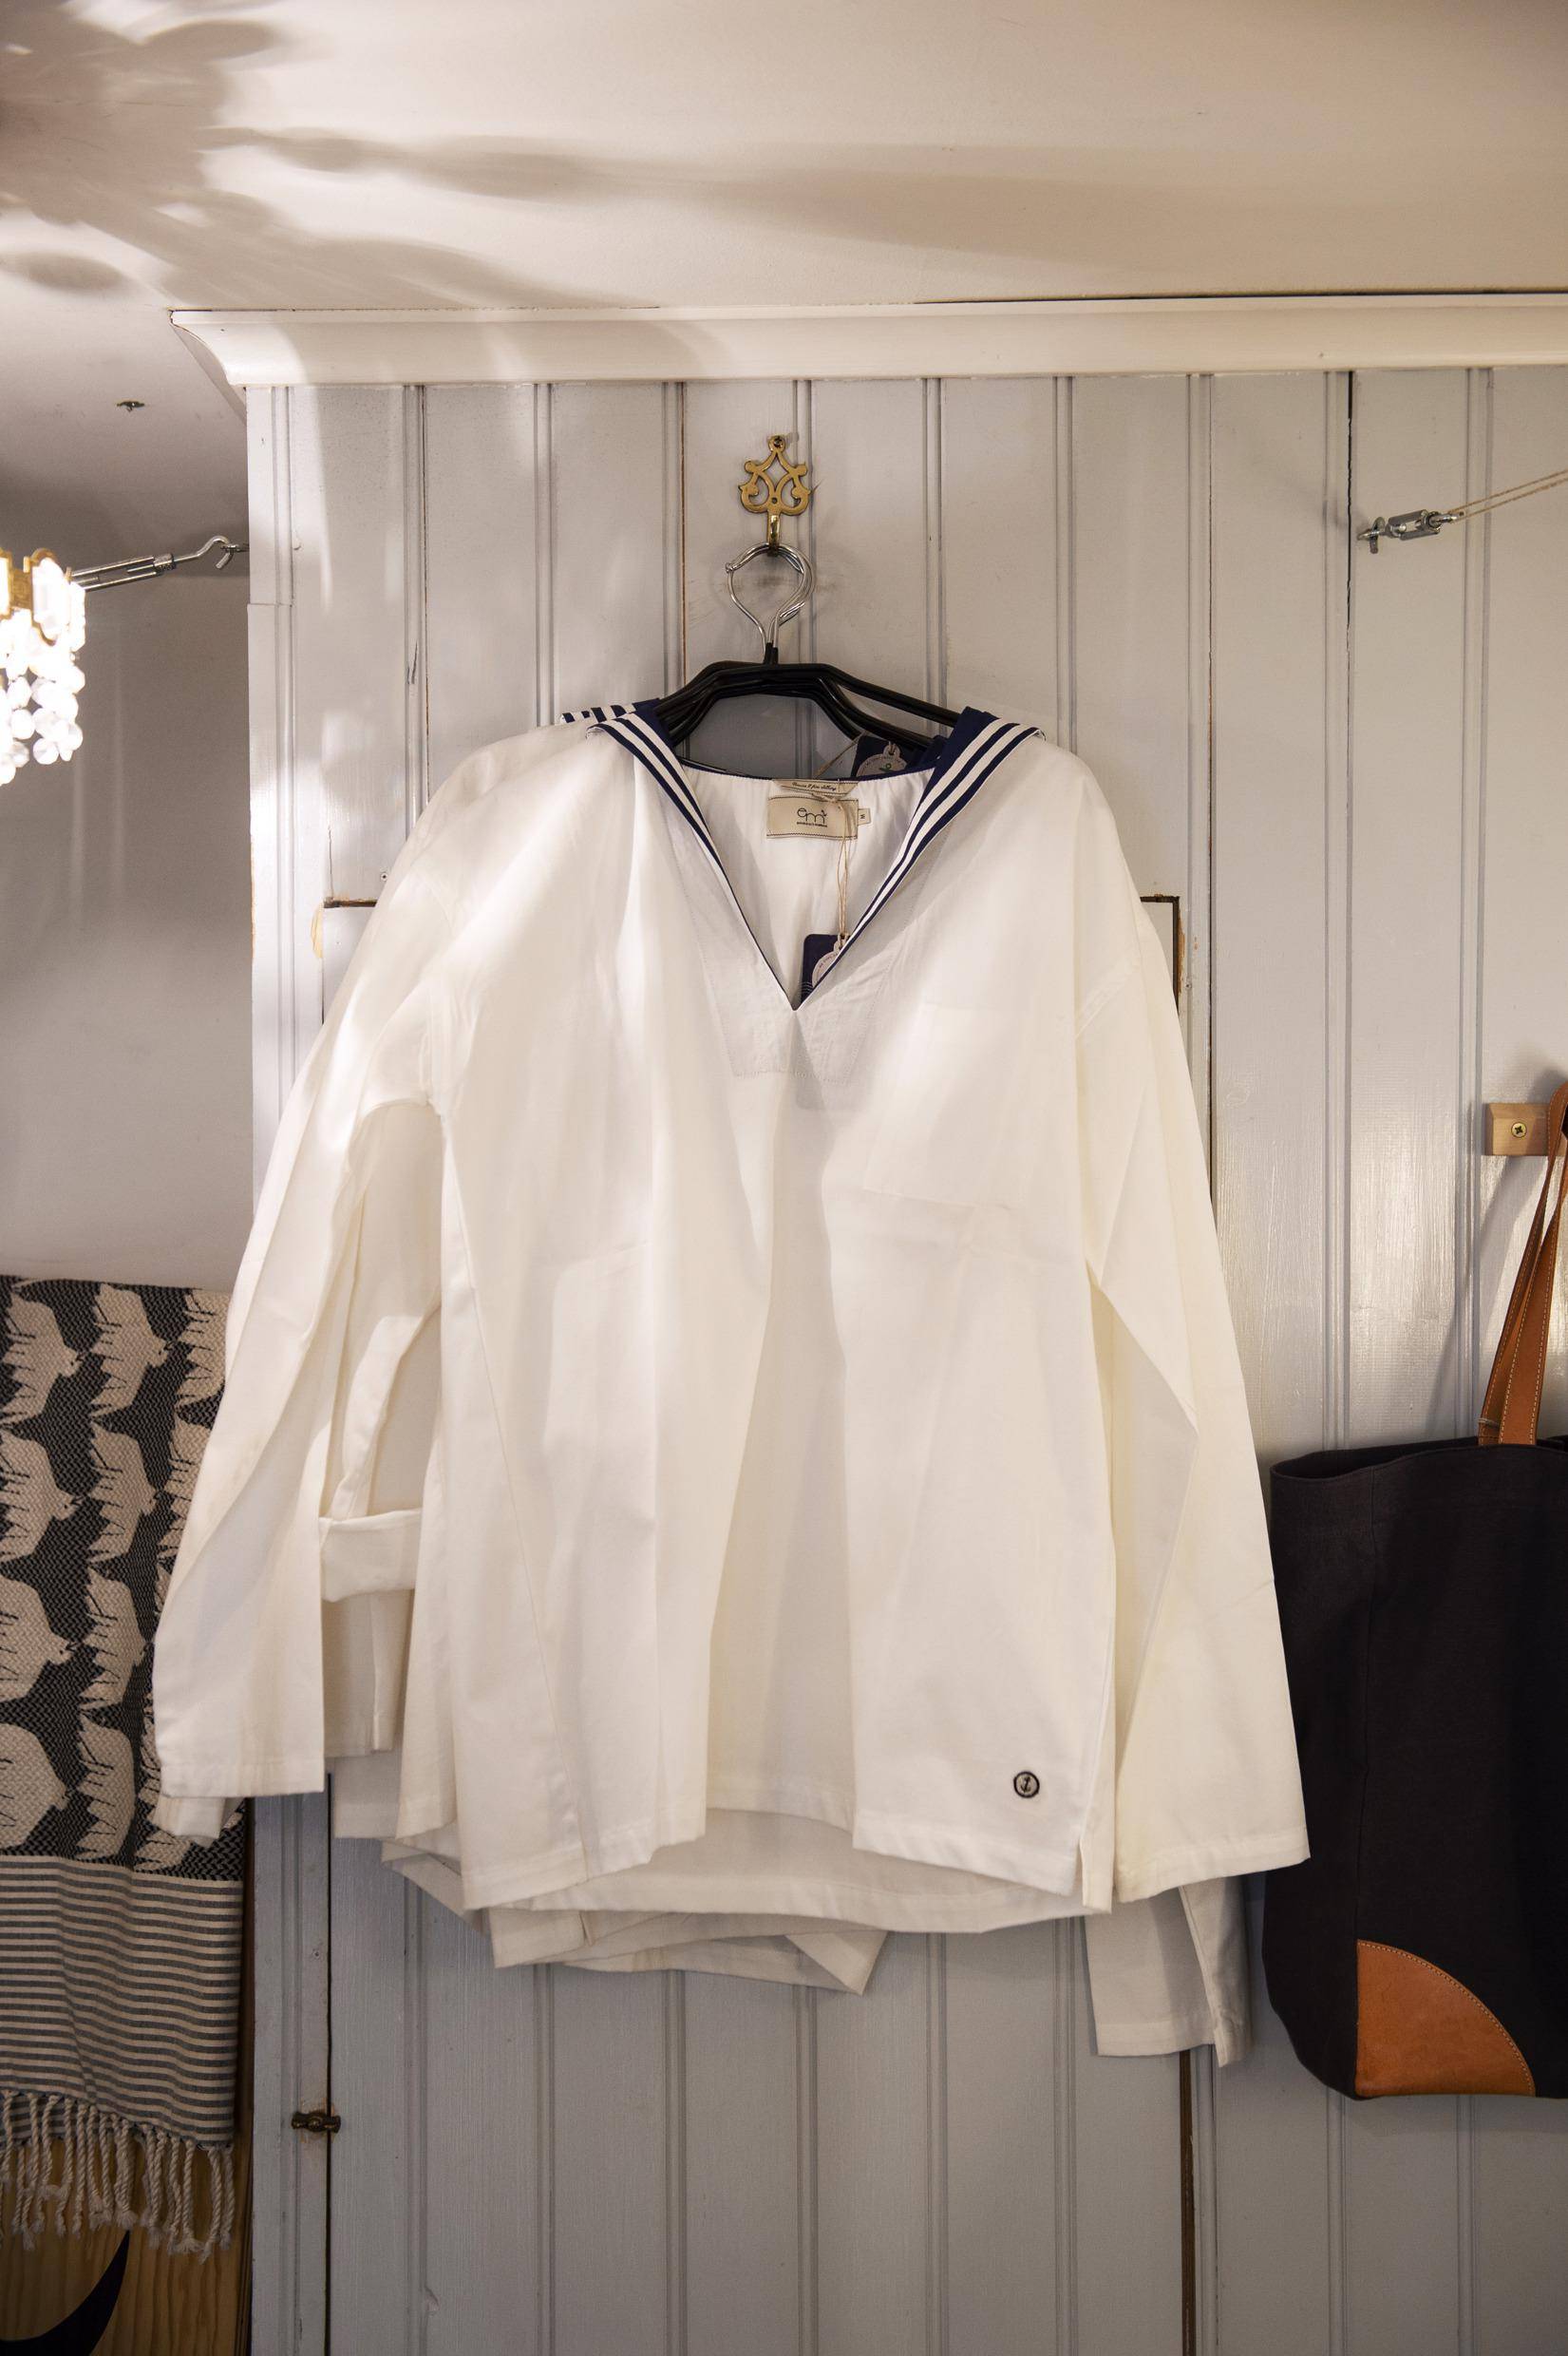 White shirt by West Swedish brand Emma & Malena.